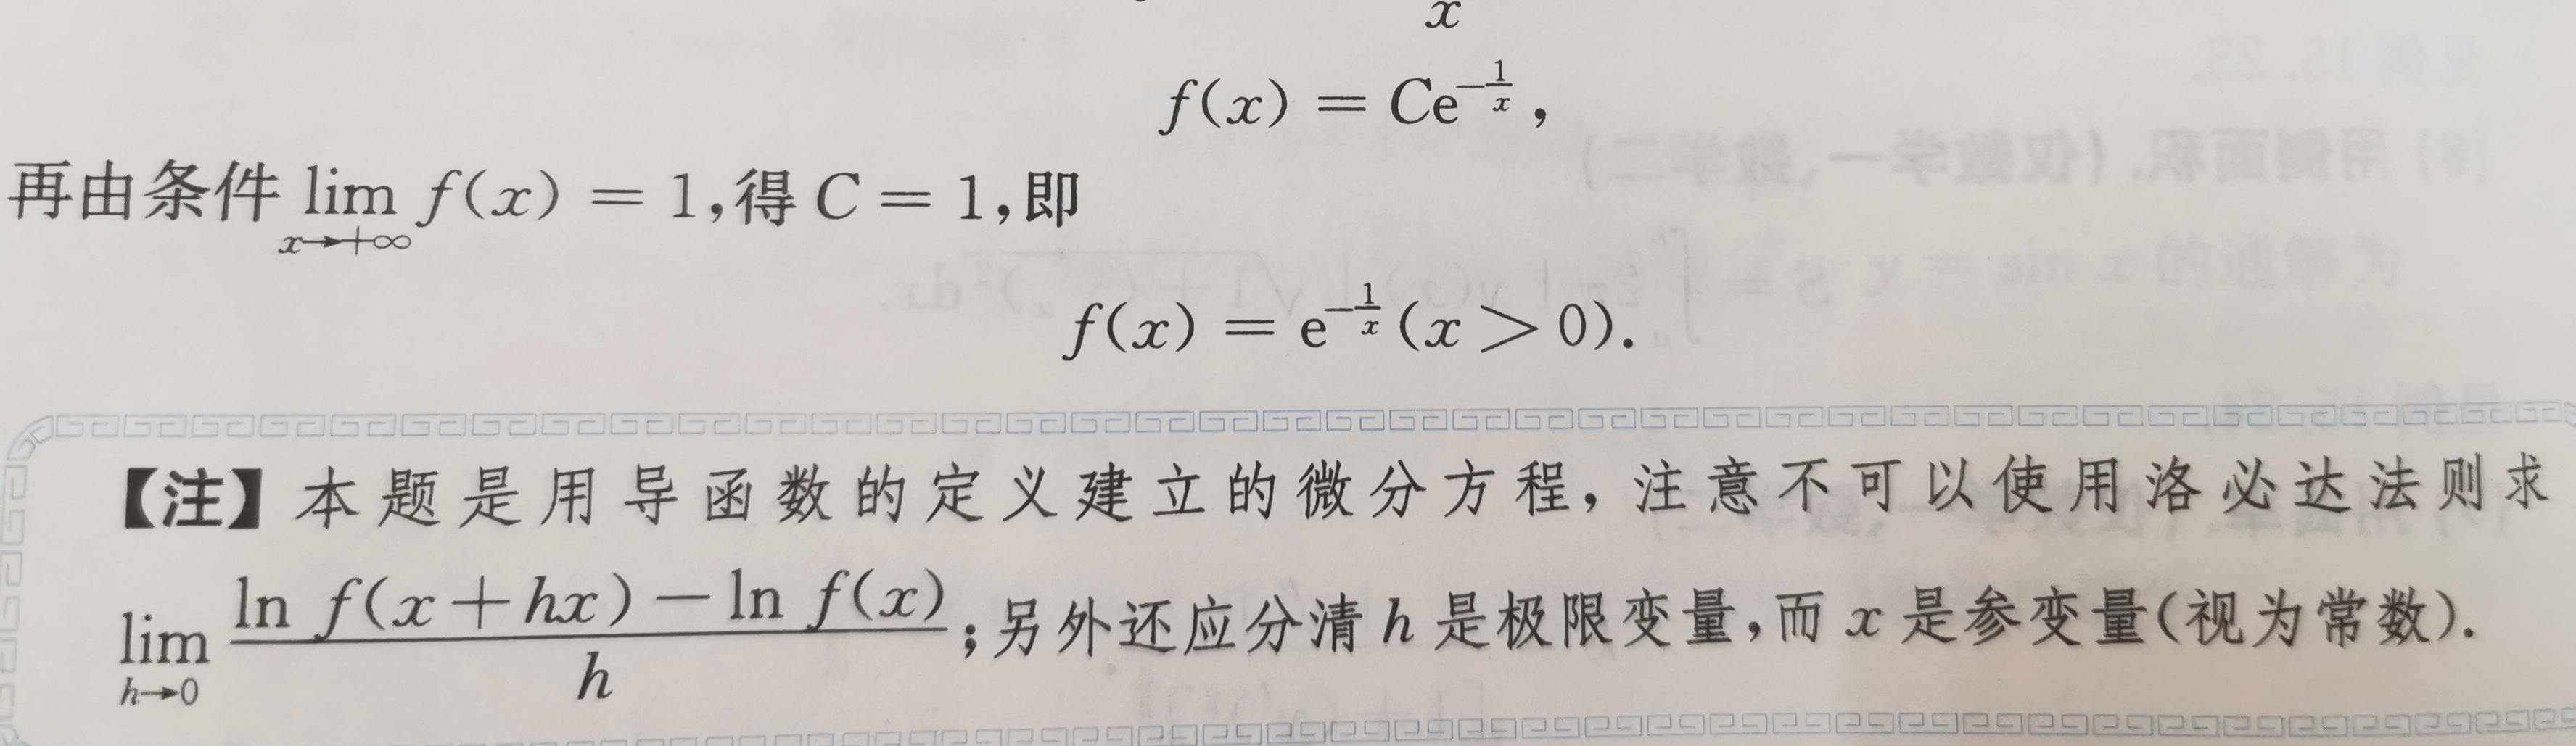 '></div><hr><h3>老师回复问题</h3>因为没法确定洛完后的极限存不存在，求导后有f